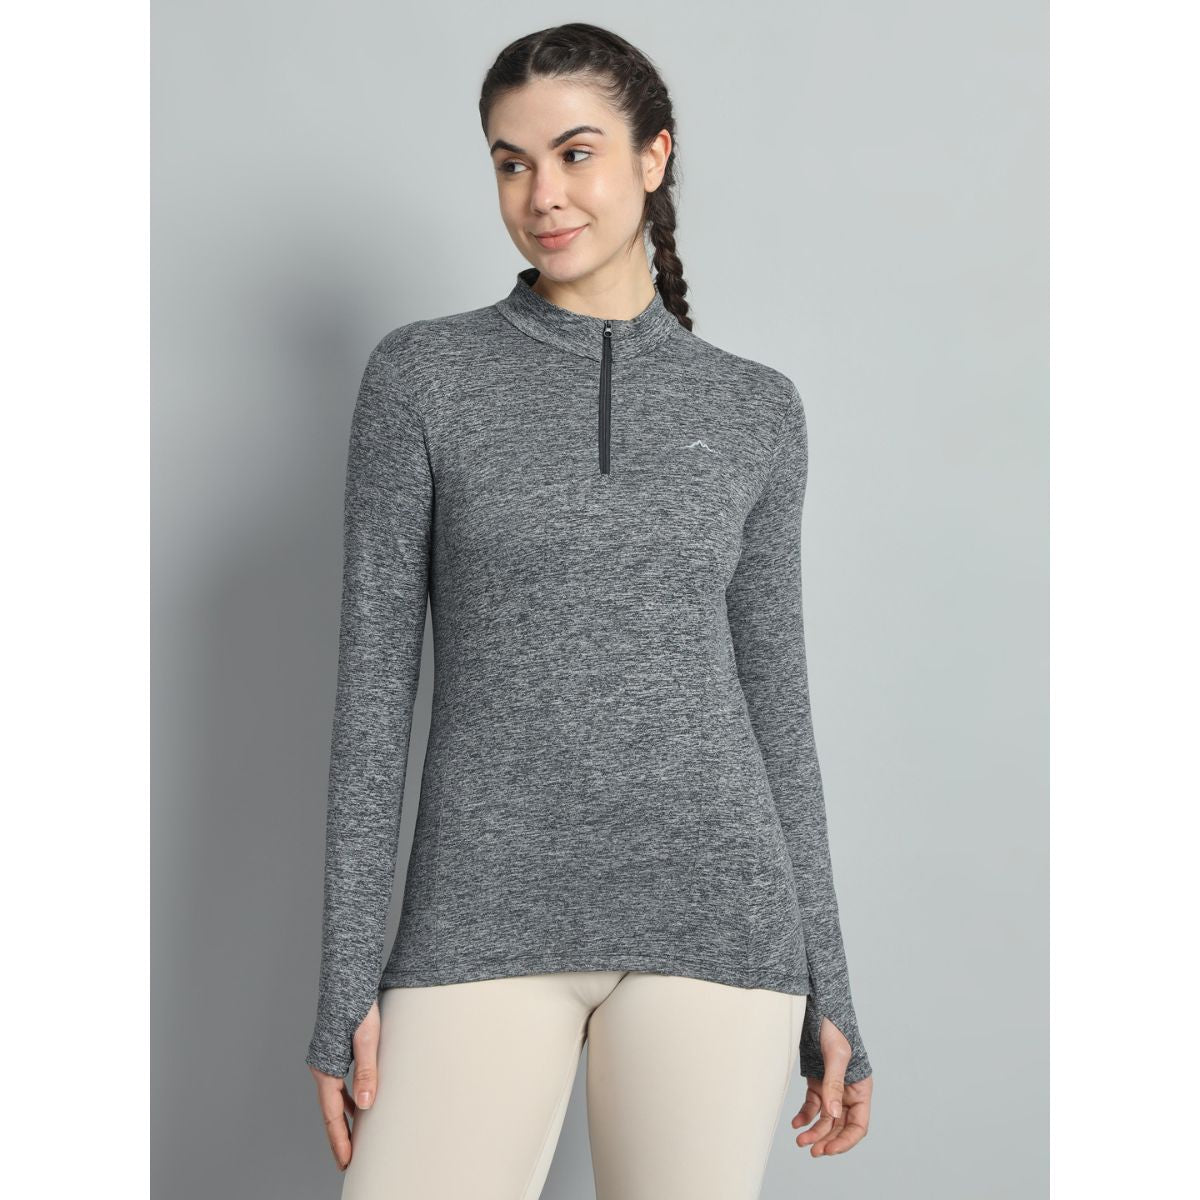 Women's Nomadic Full Sleeves T-Shirt / Baselayer - Charcoal Gray 1